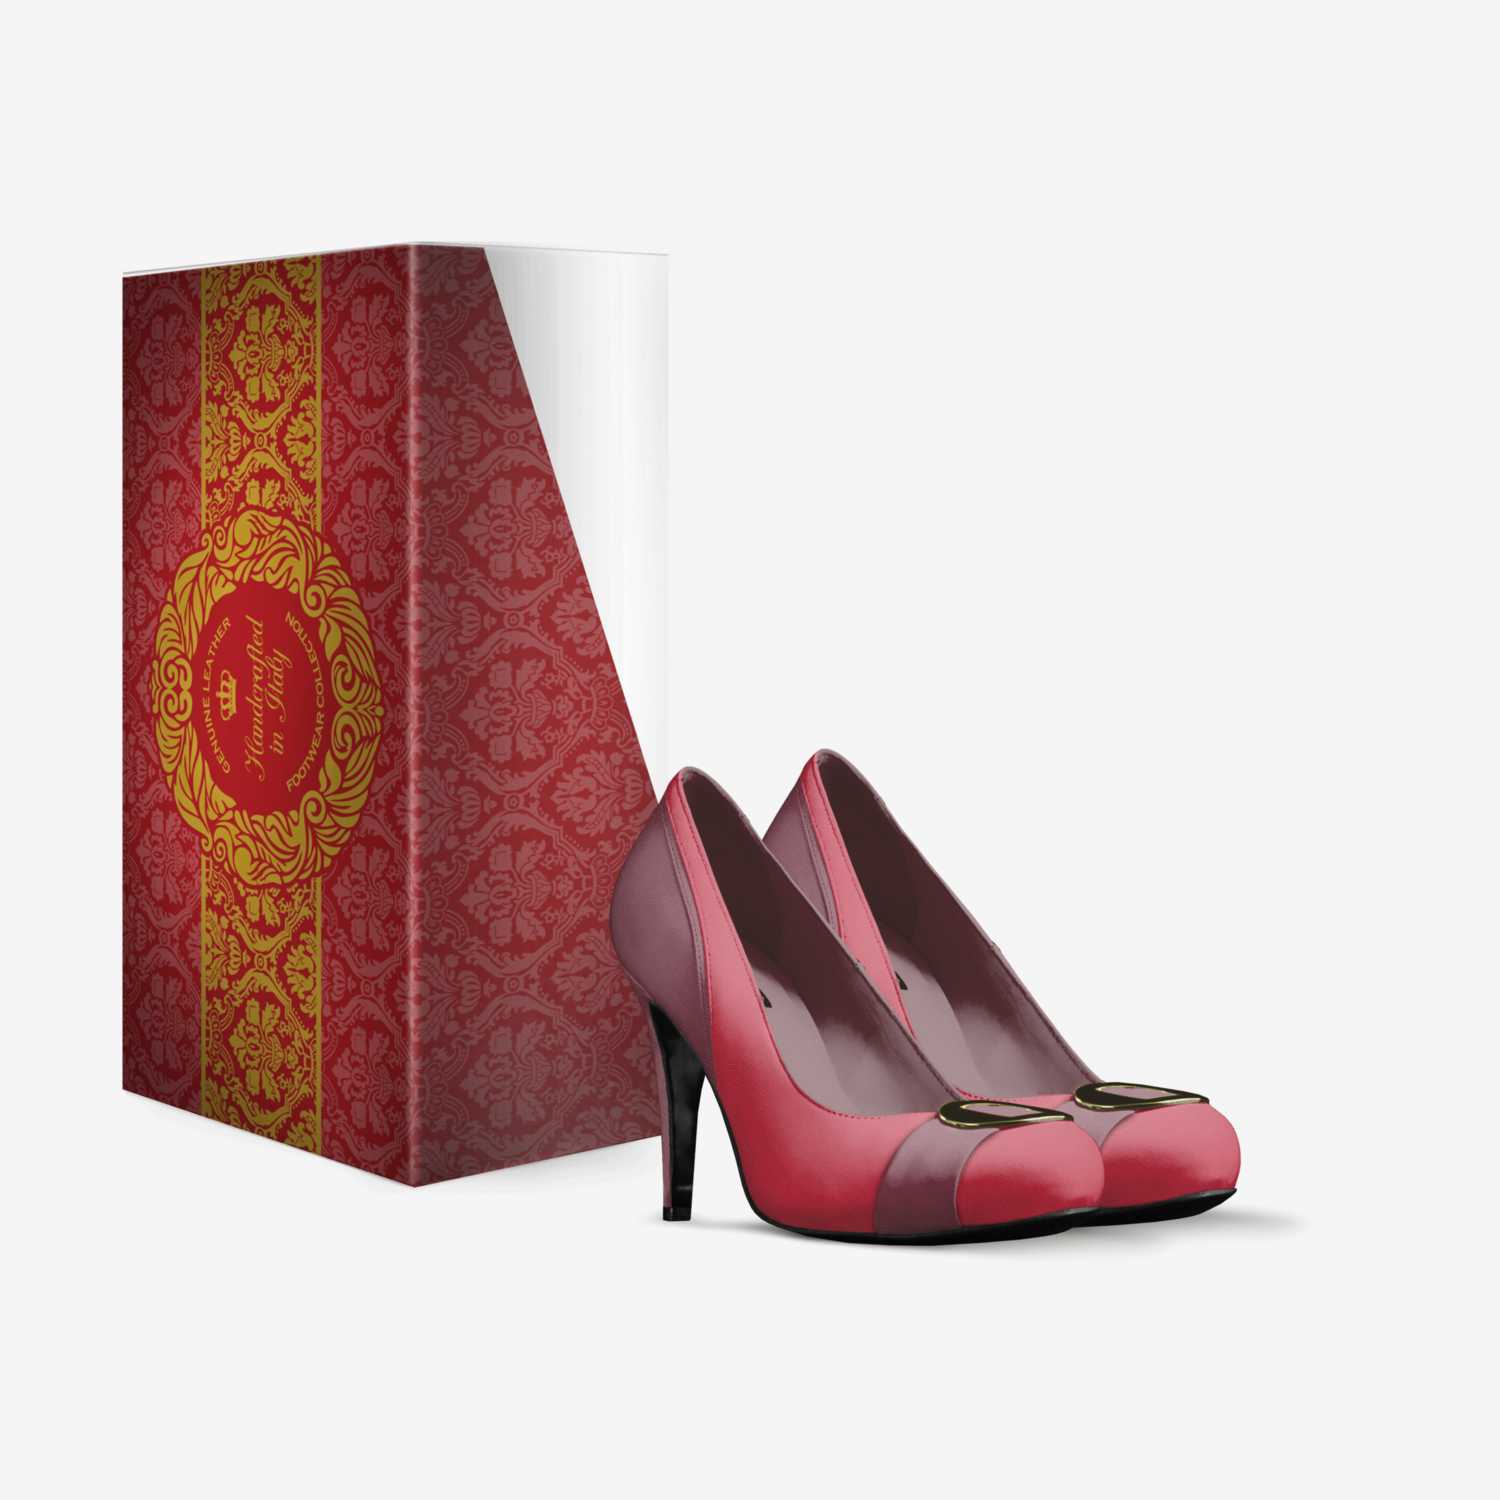 Theori Vino Heel custom made in Italy shoes by Wendell Tucker | Box view